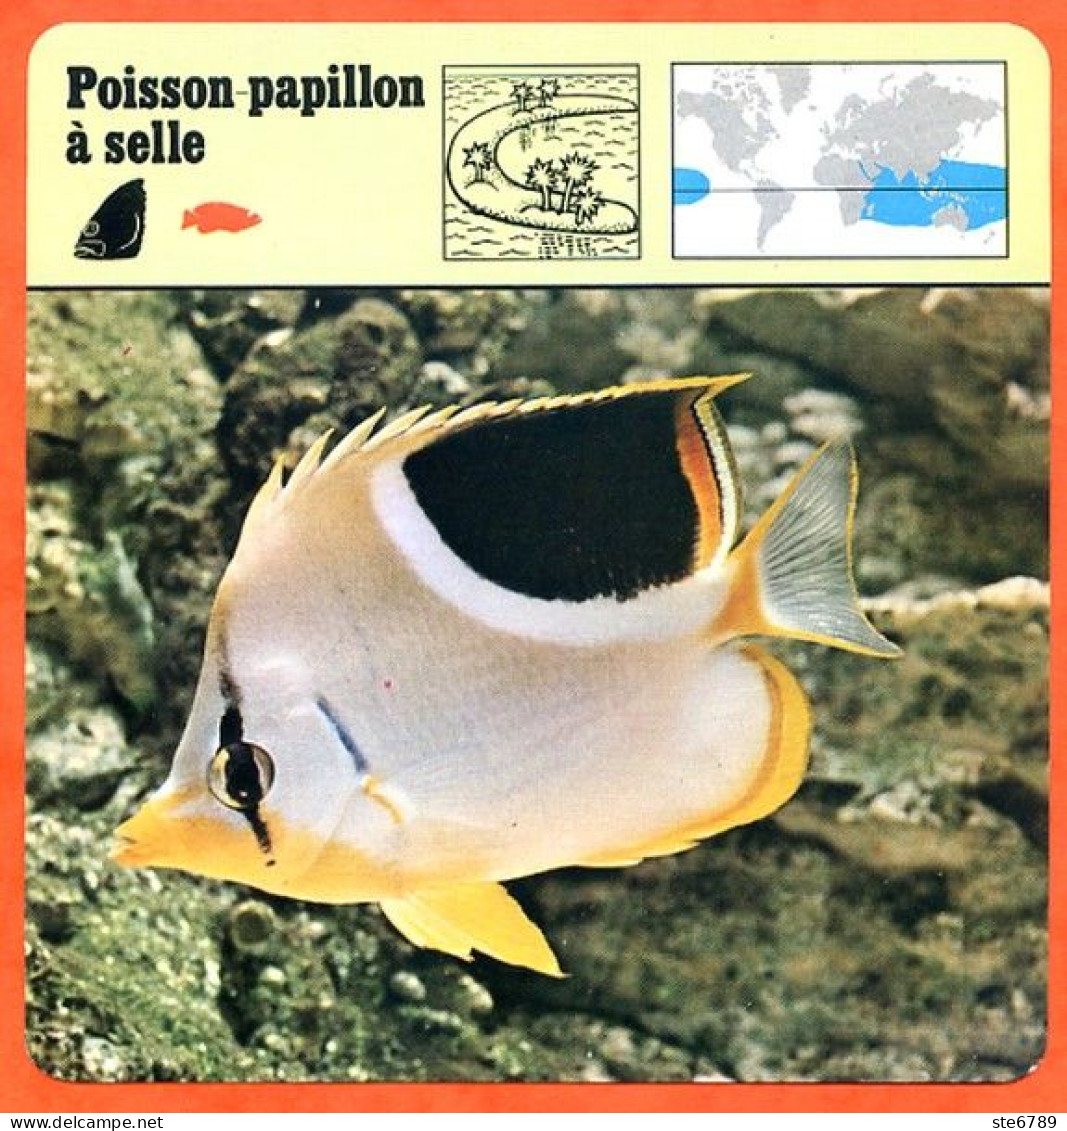 POISSON PAPILLON A SELLE  Animaux Animal Poissons Fiche Illustree Documentée - Tiere